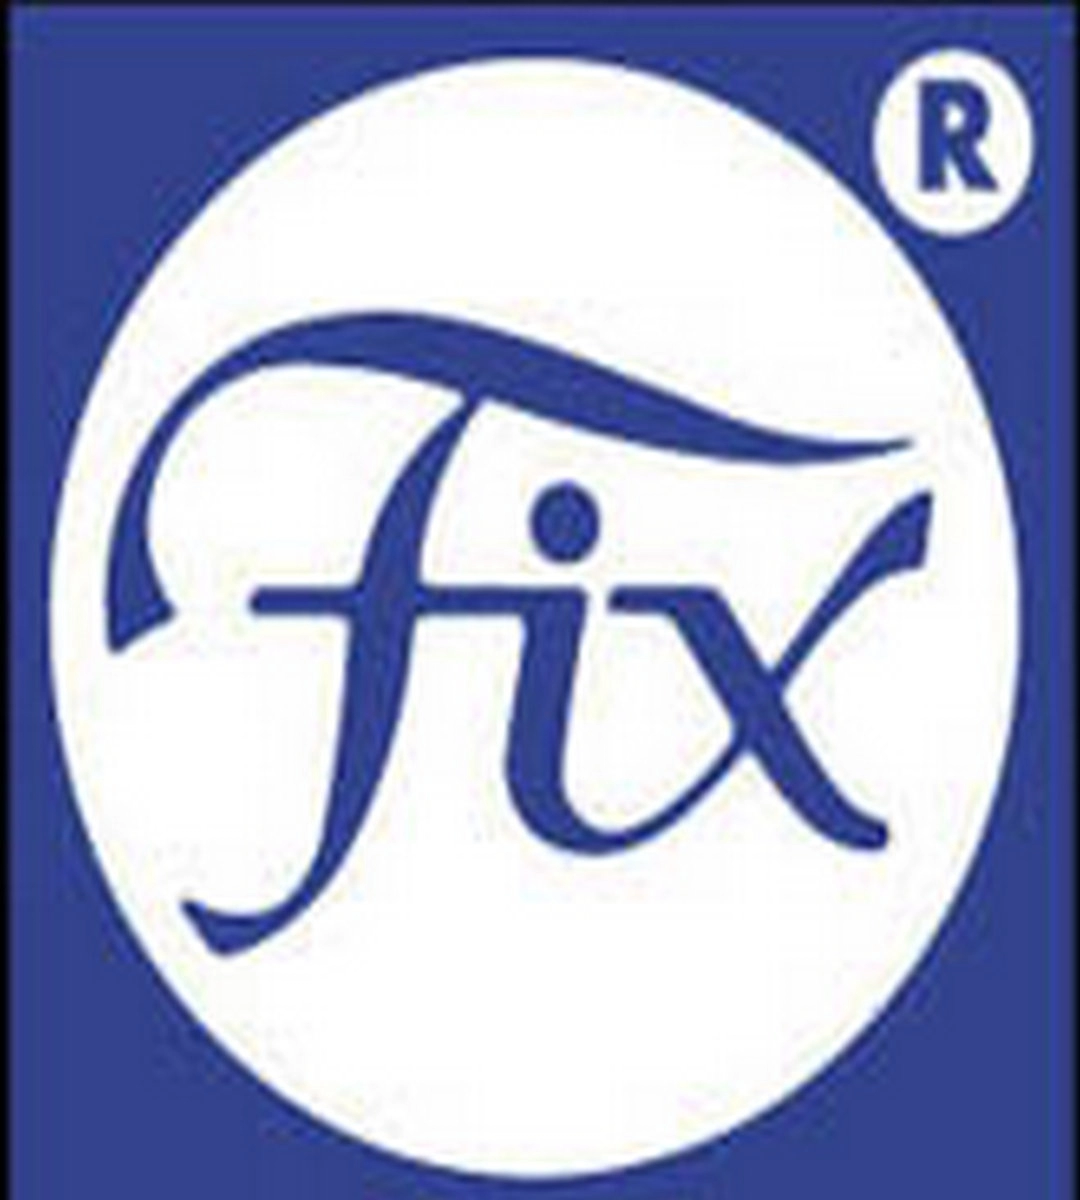 Fix logo